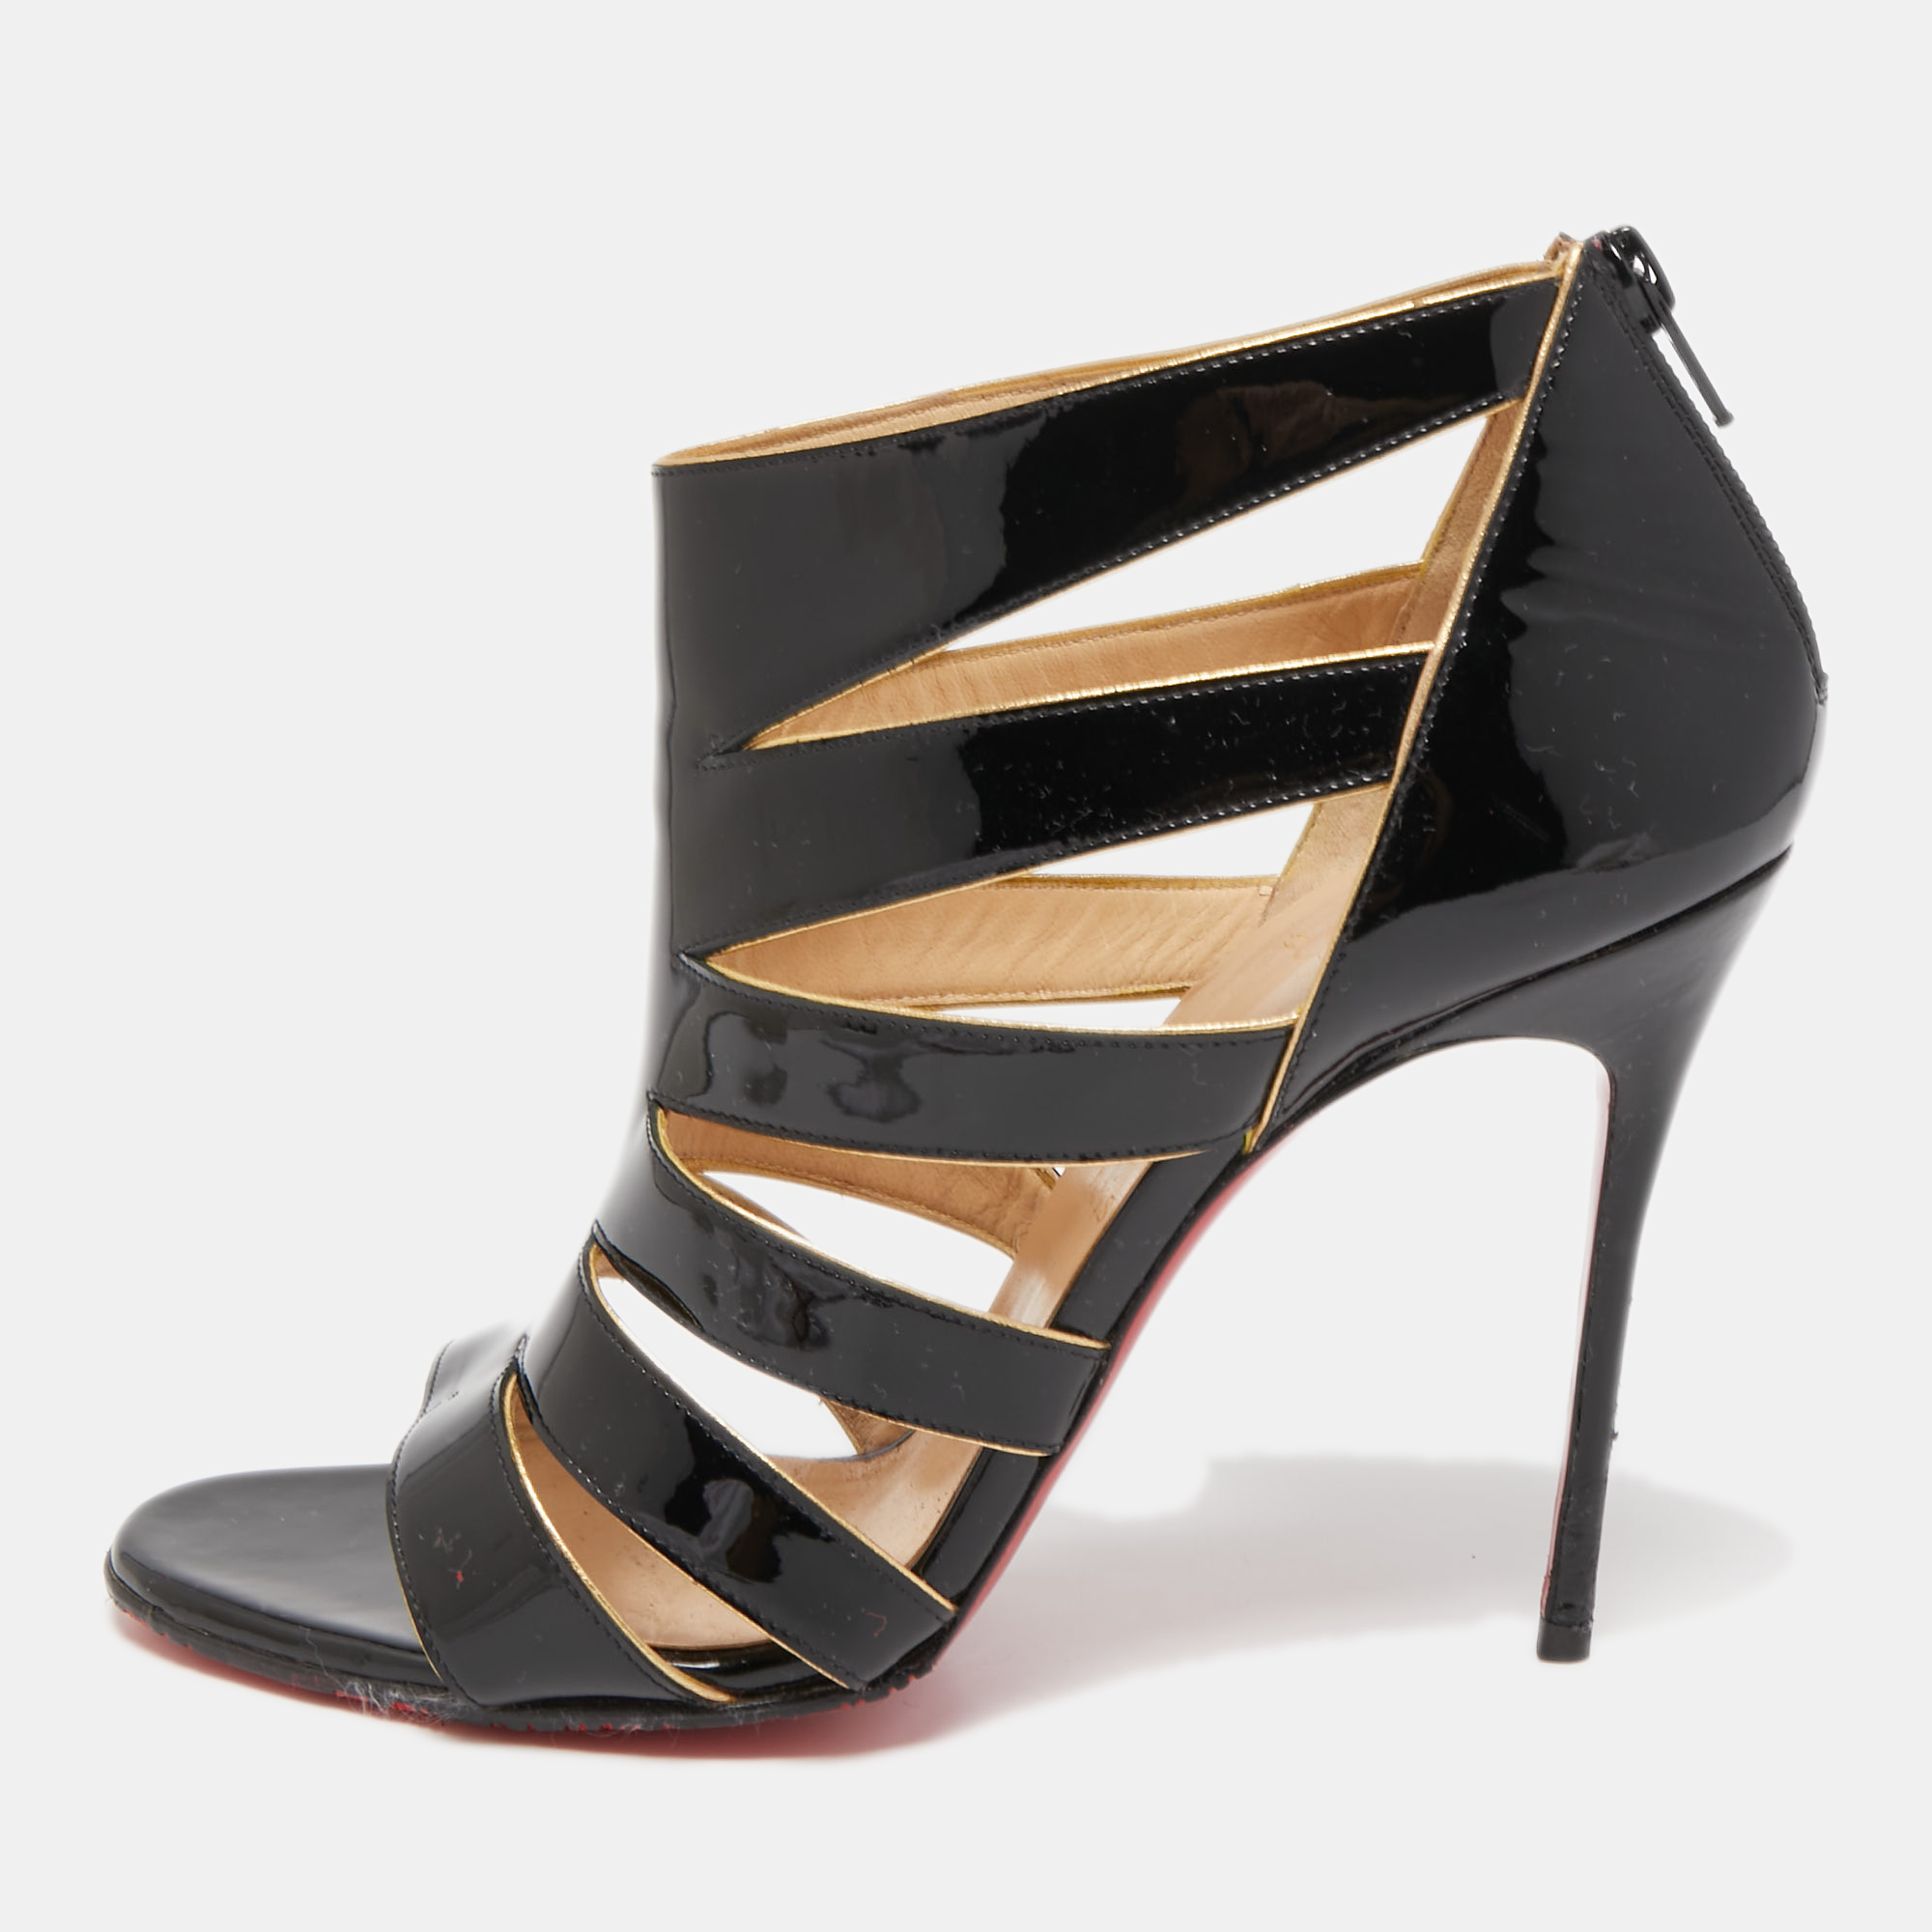 Christian Louboutin Black/Gold Patent Leather Beauty K Sandals Size 40